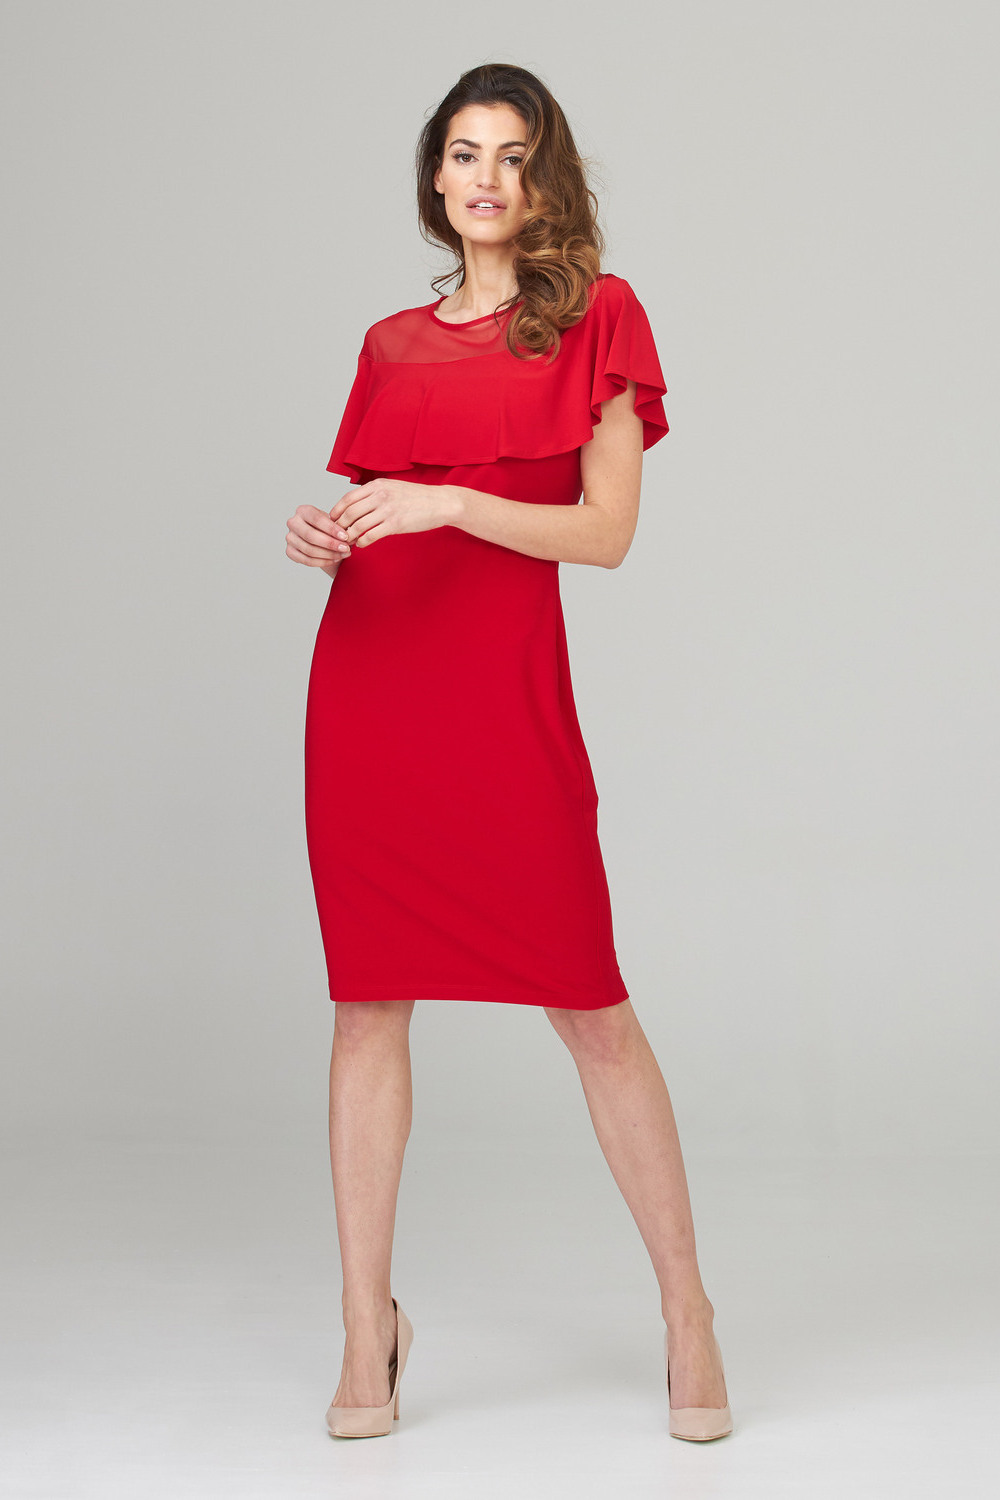 Joseph Ribkoff Dress Style 202125. Lipstick Red 173